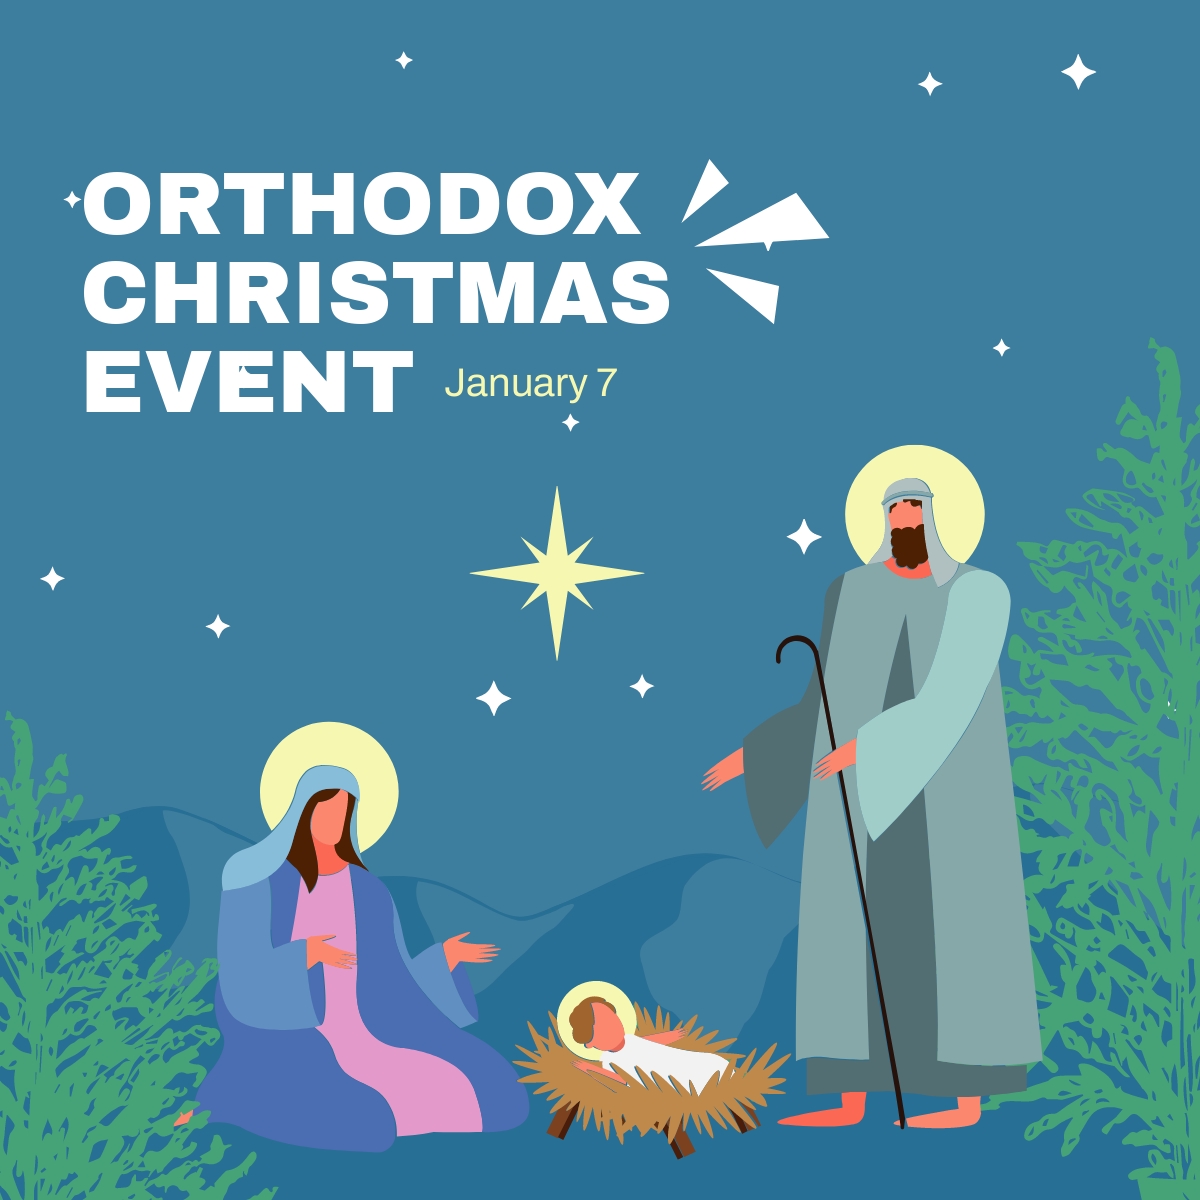 Orthodox Christmas Event Linkedin Post Template